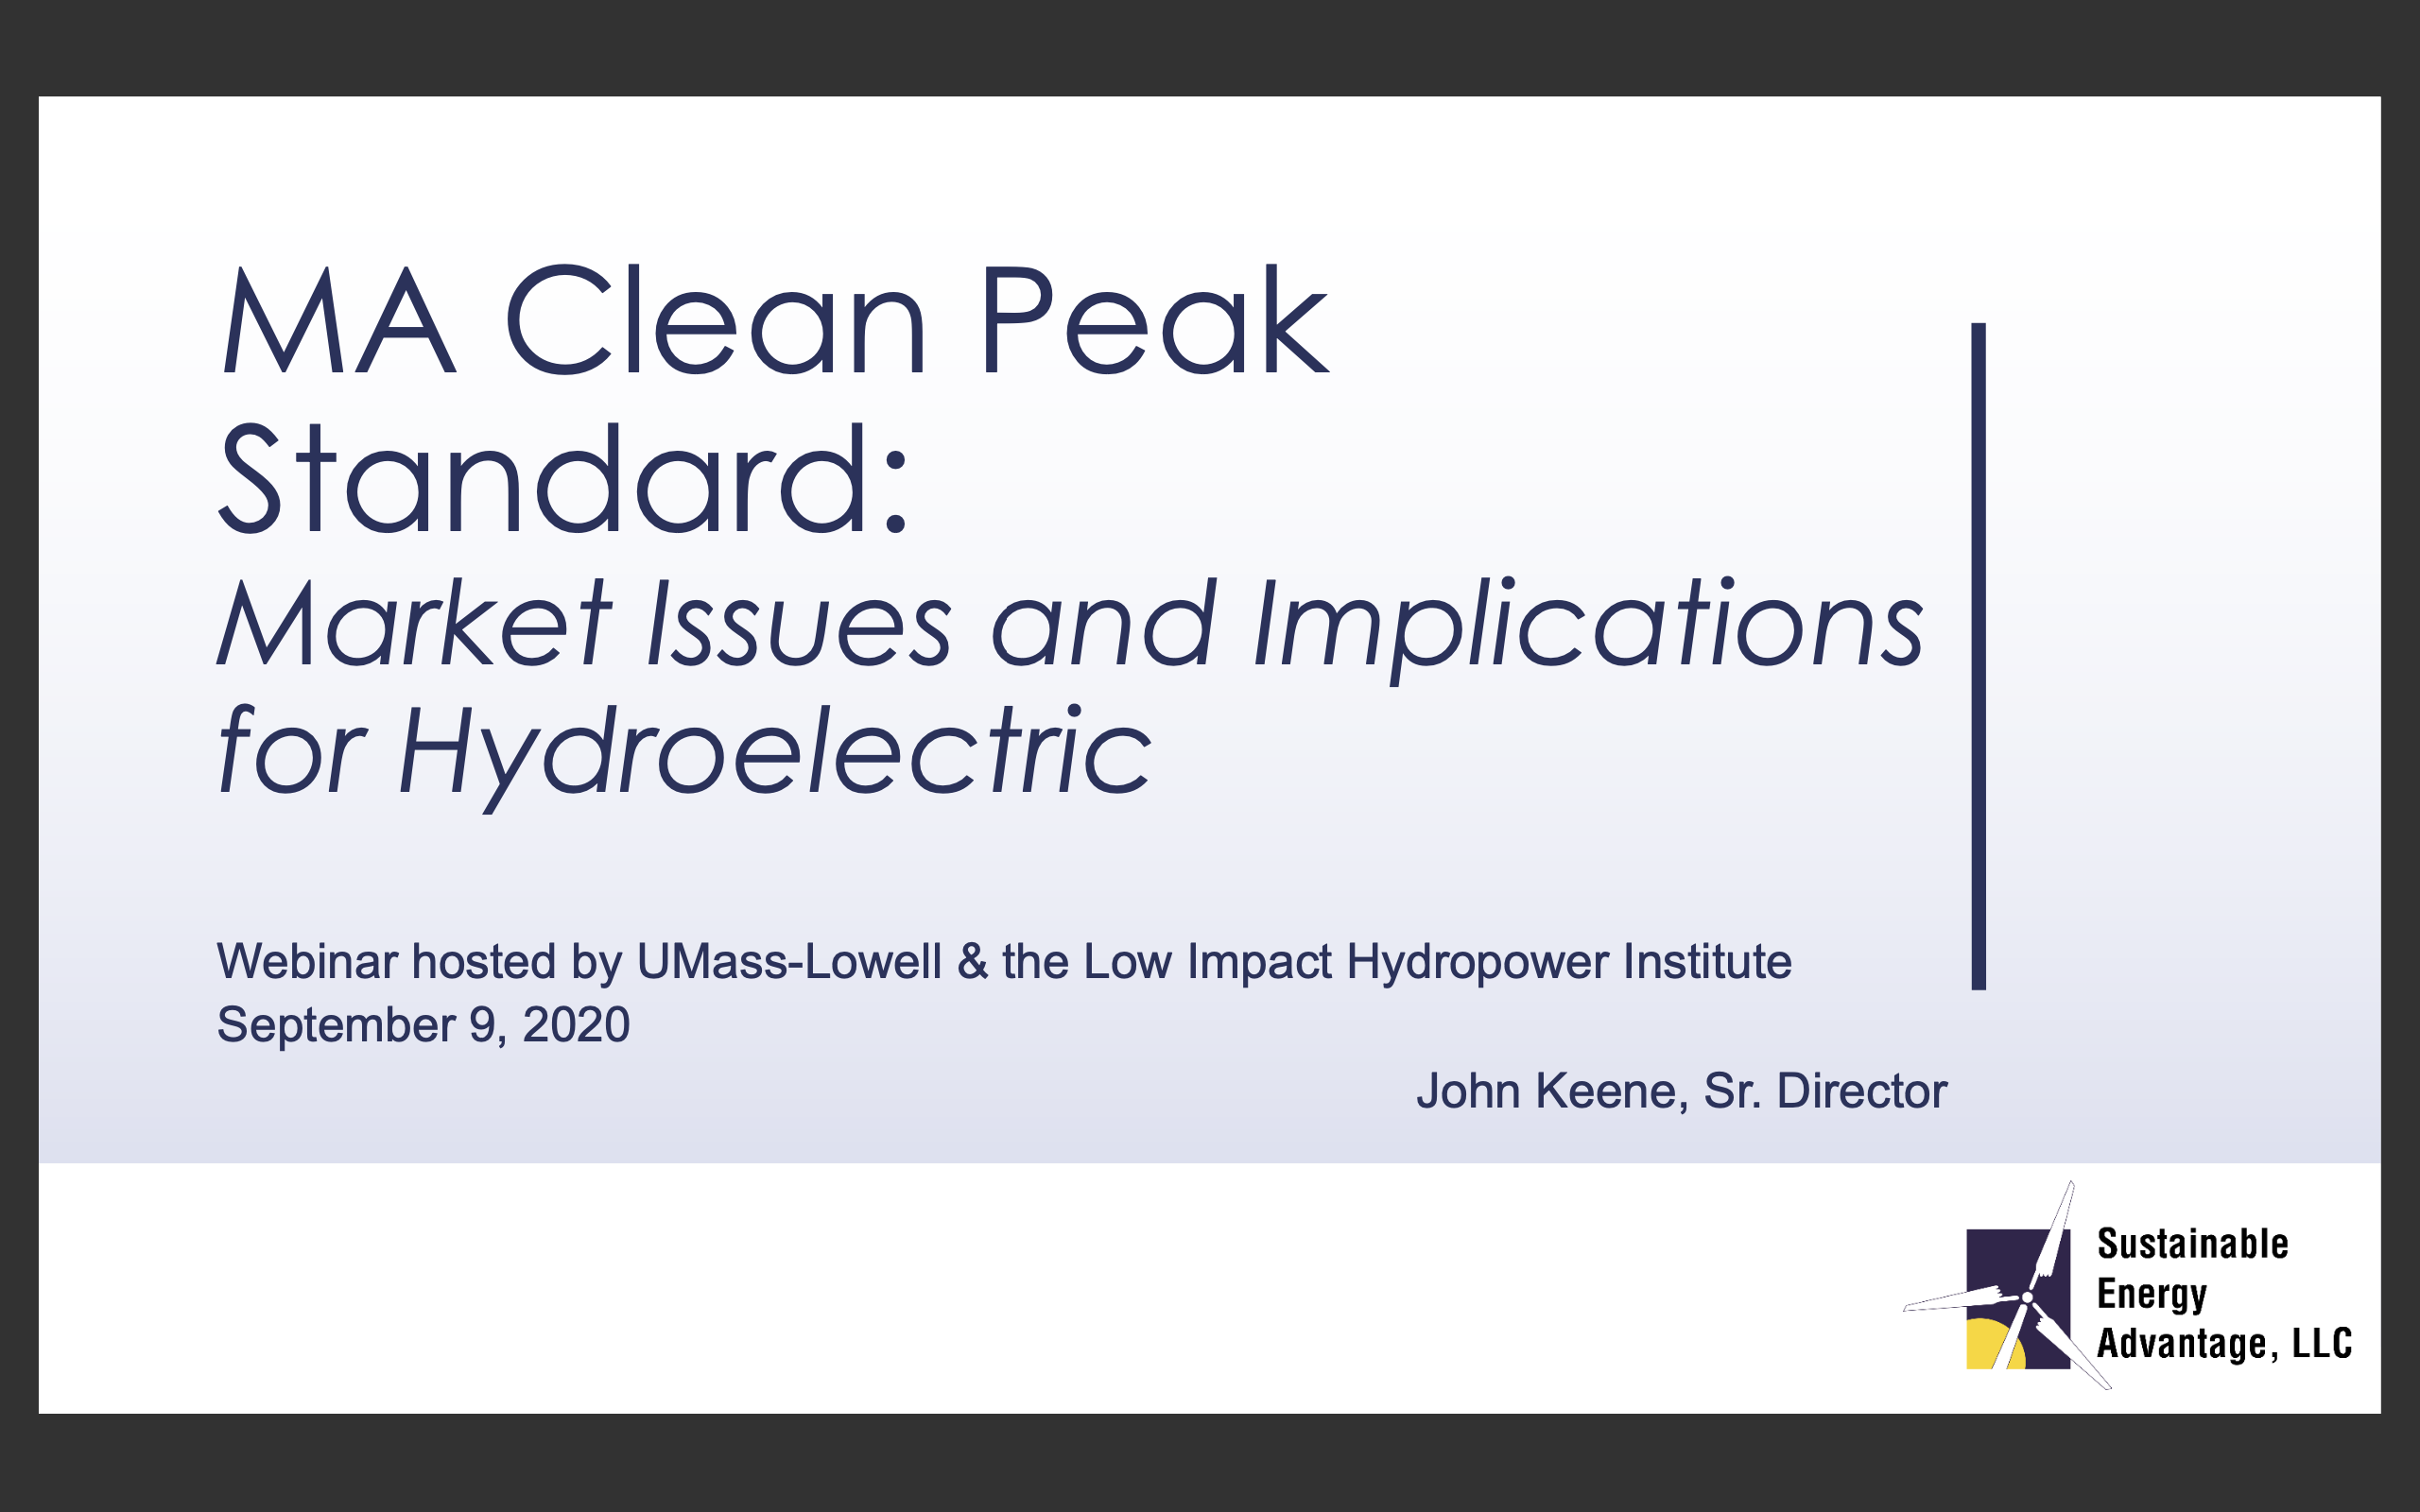 Clean Peak Standard Panel Image - John Keene